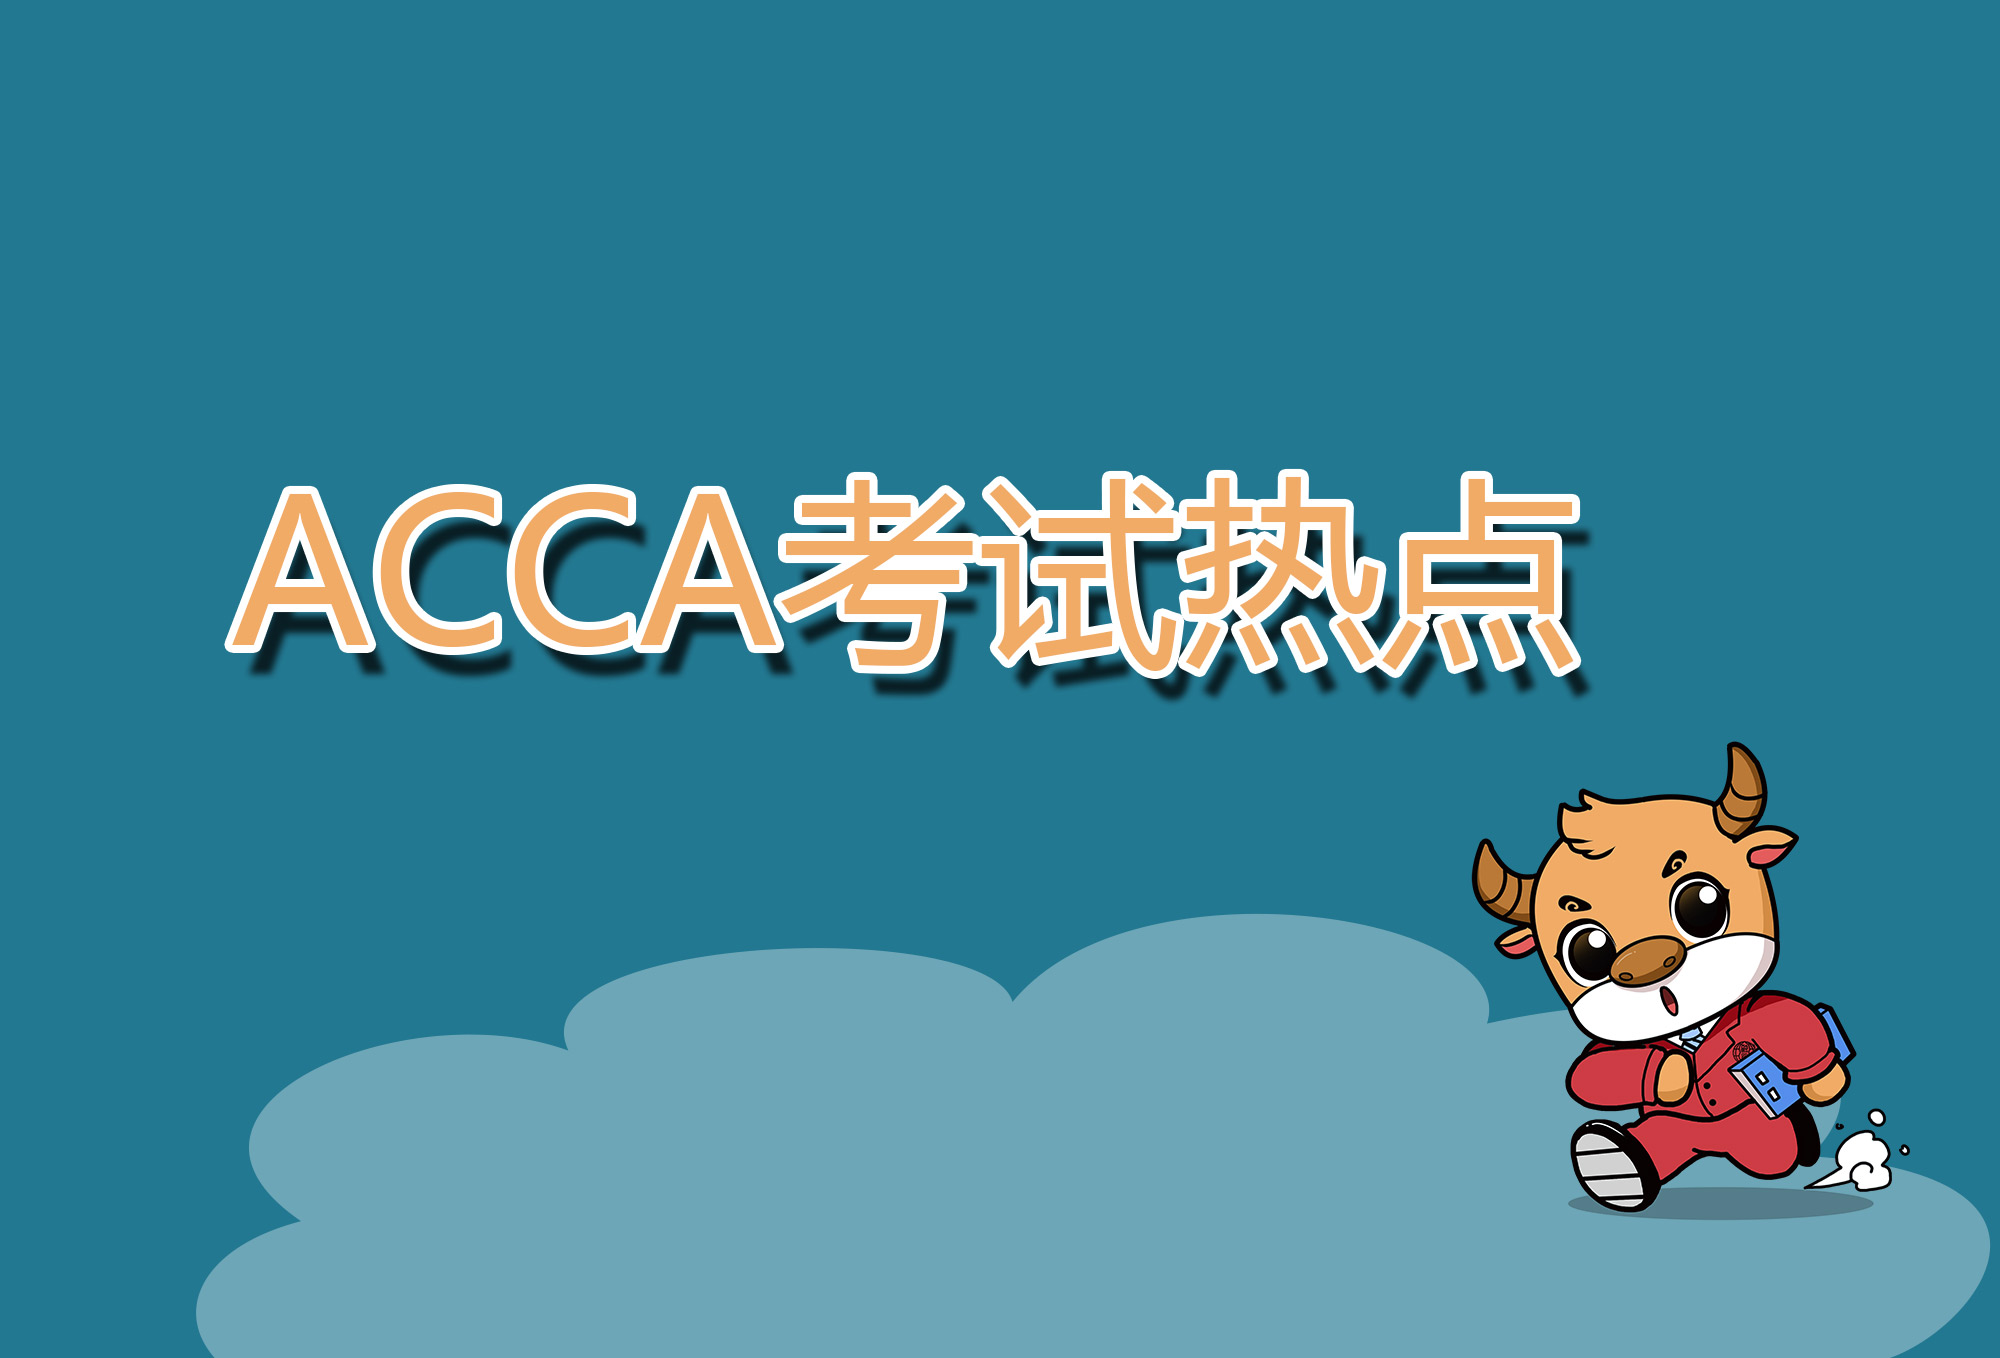 ACCA证书在国内有用吗？ACCA证书的优势是什么？